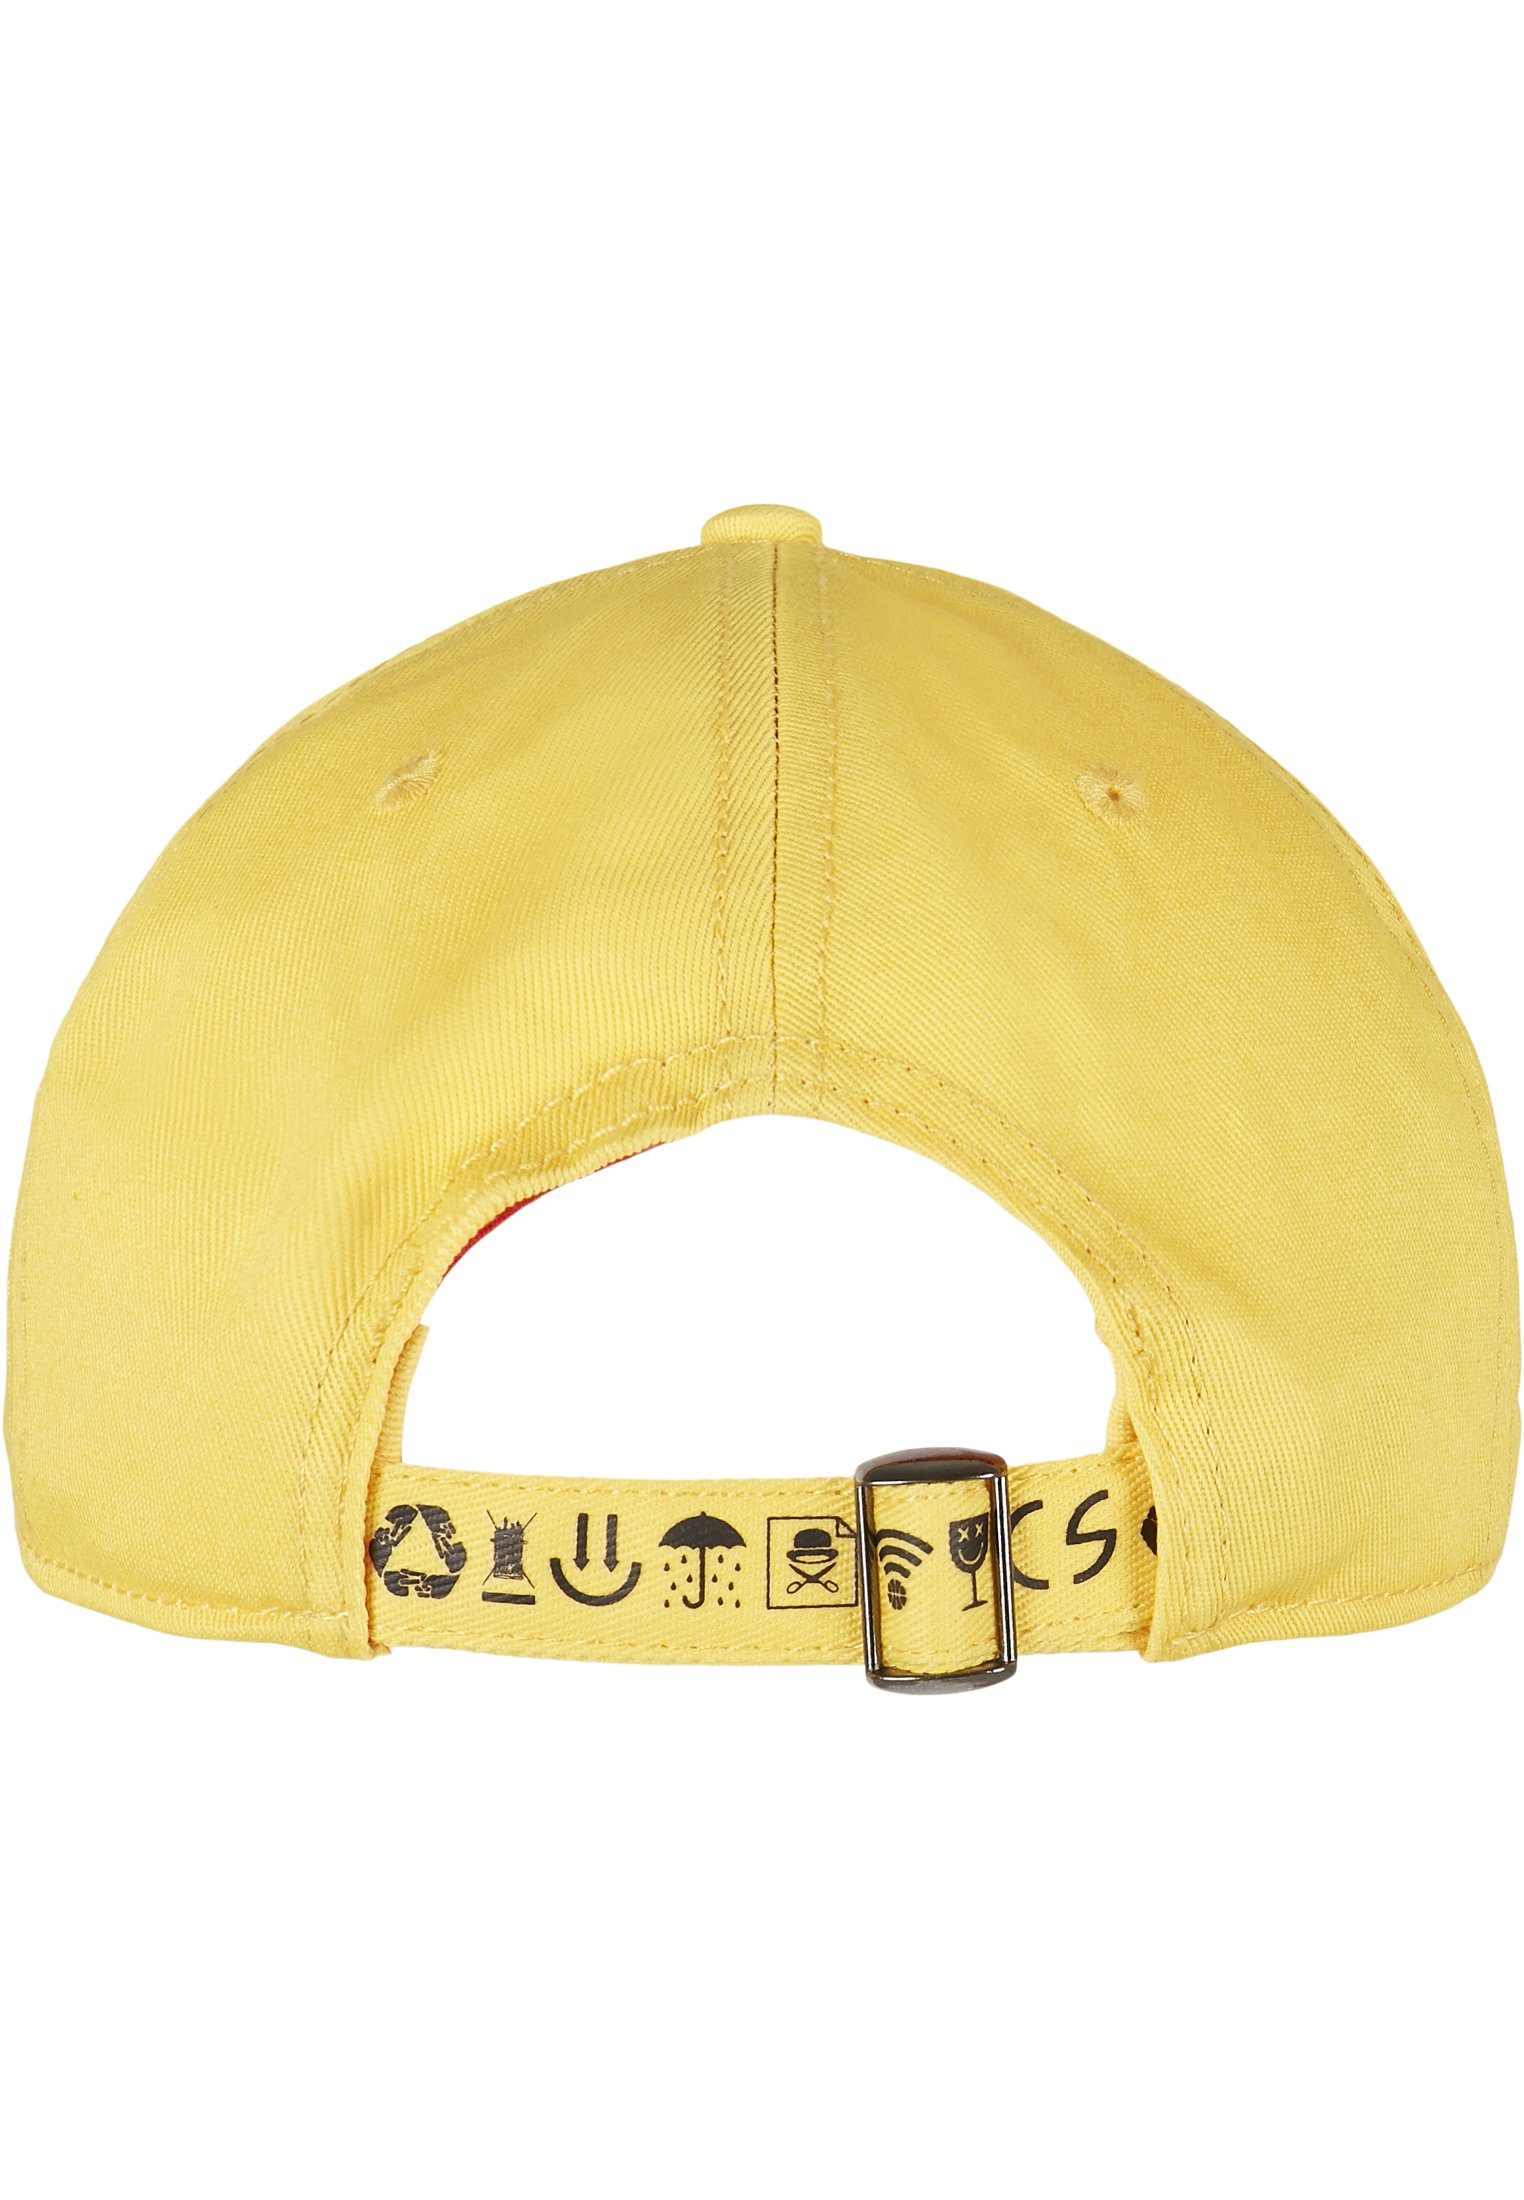 Peace Flex CAYLER C&S & SONS Iconic Cap Cap yellow/multicolor Curved